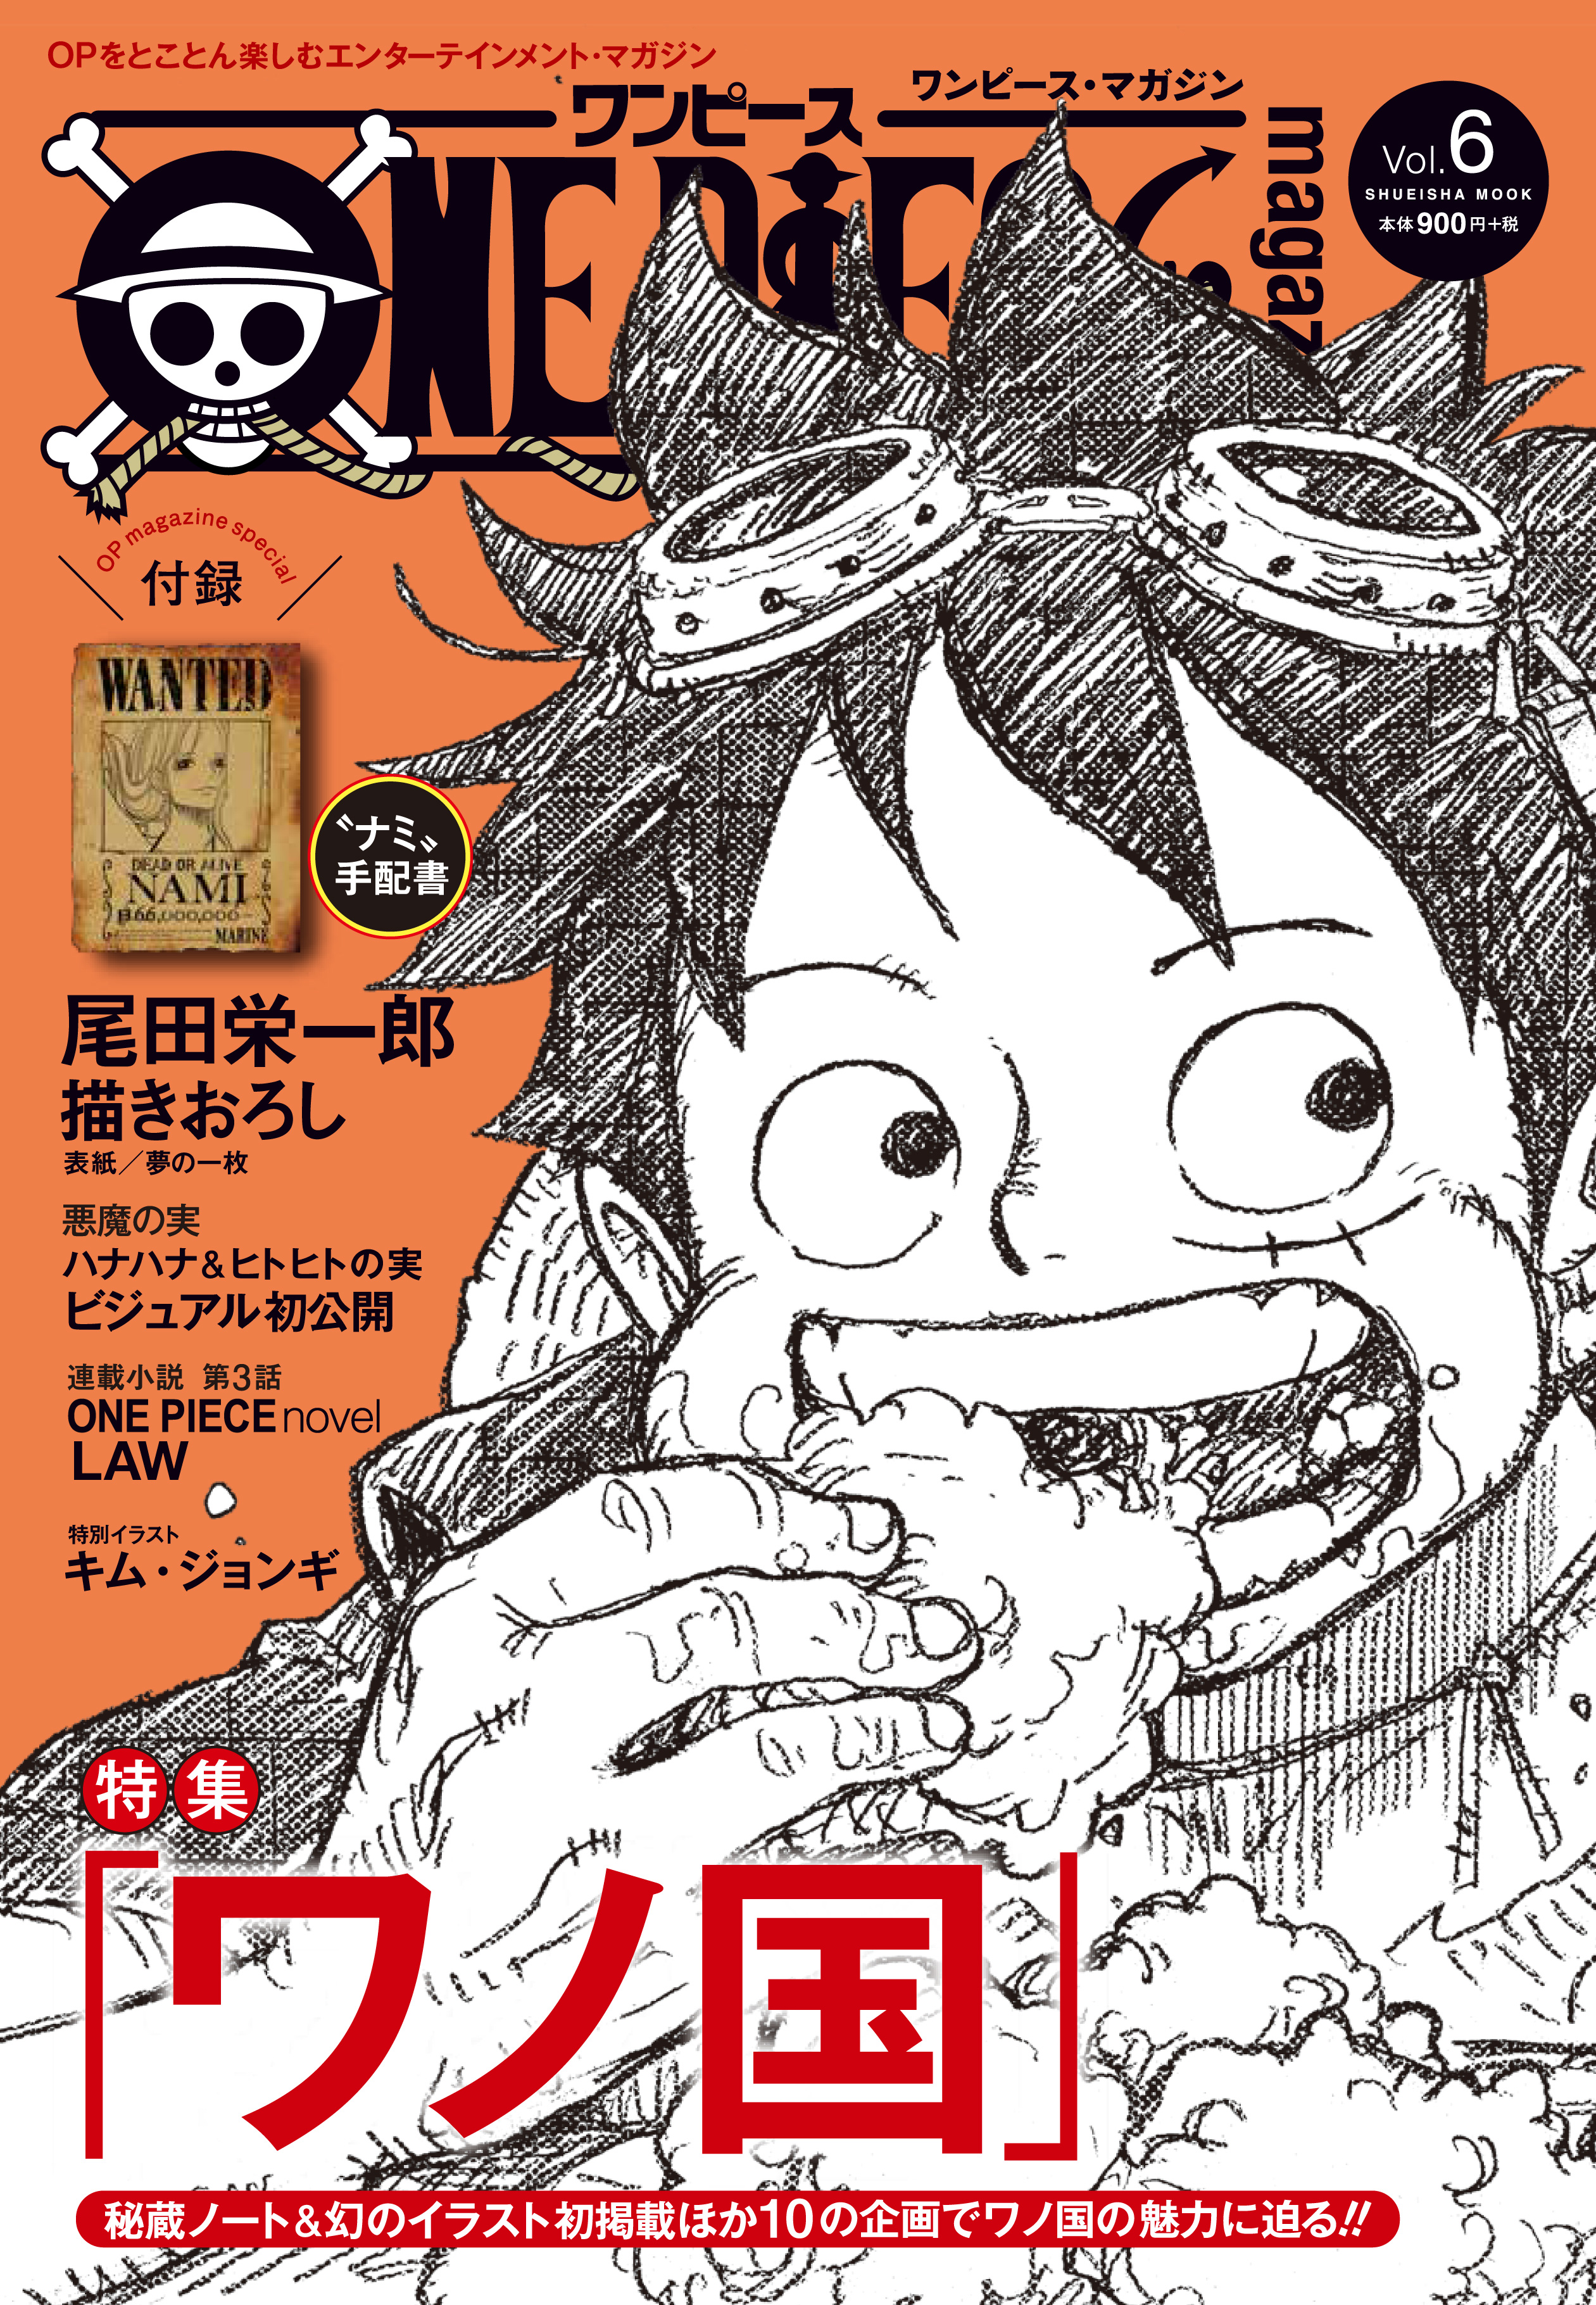 One Piece Magazine Vol 6 5 24発売 にgreeeenのインタビュー記事が掲載 High Speed Boyz Inc 公式ホームページ